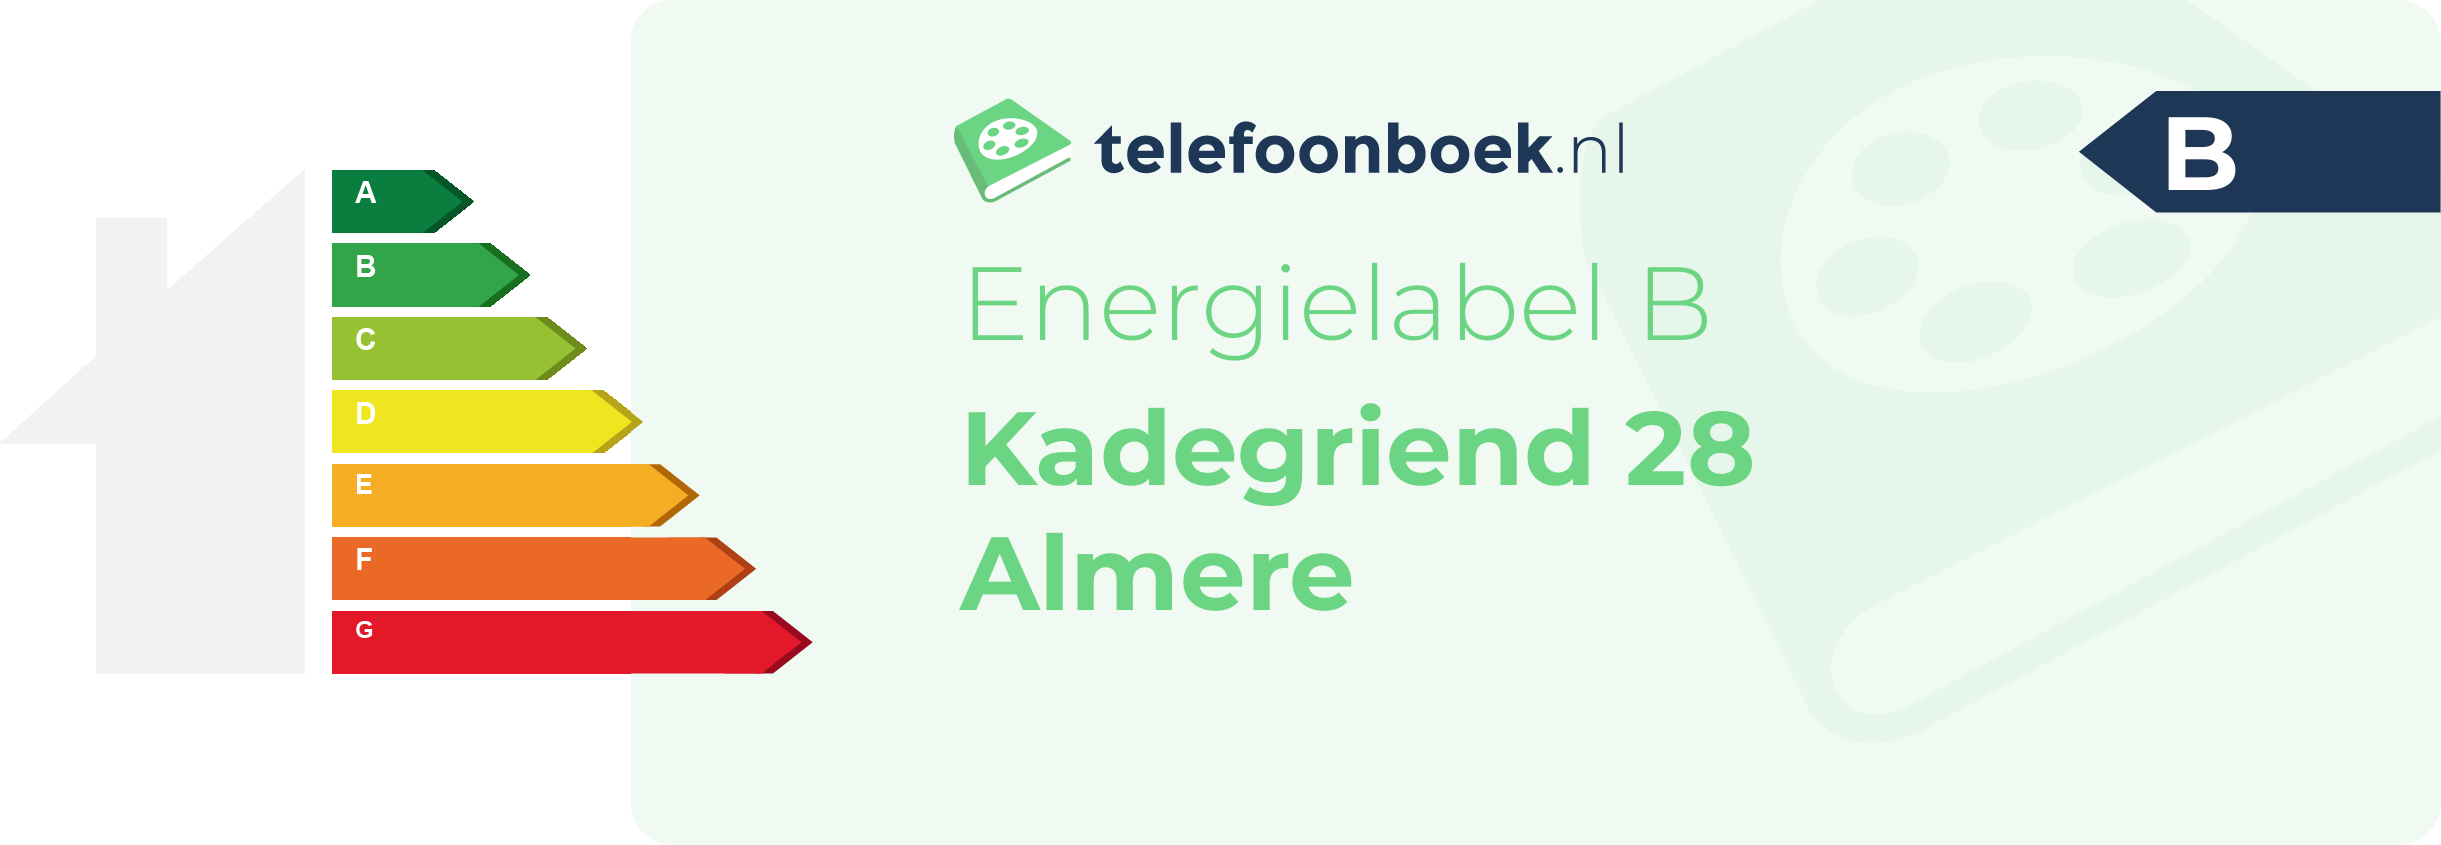 Energielabel Kadegriend 28 Almere